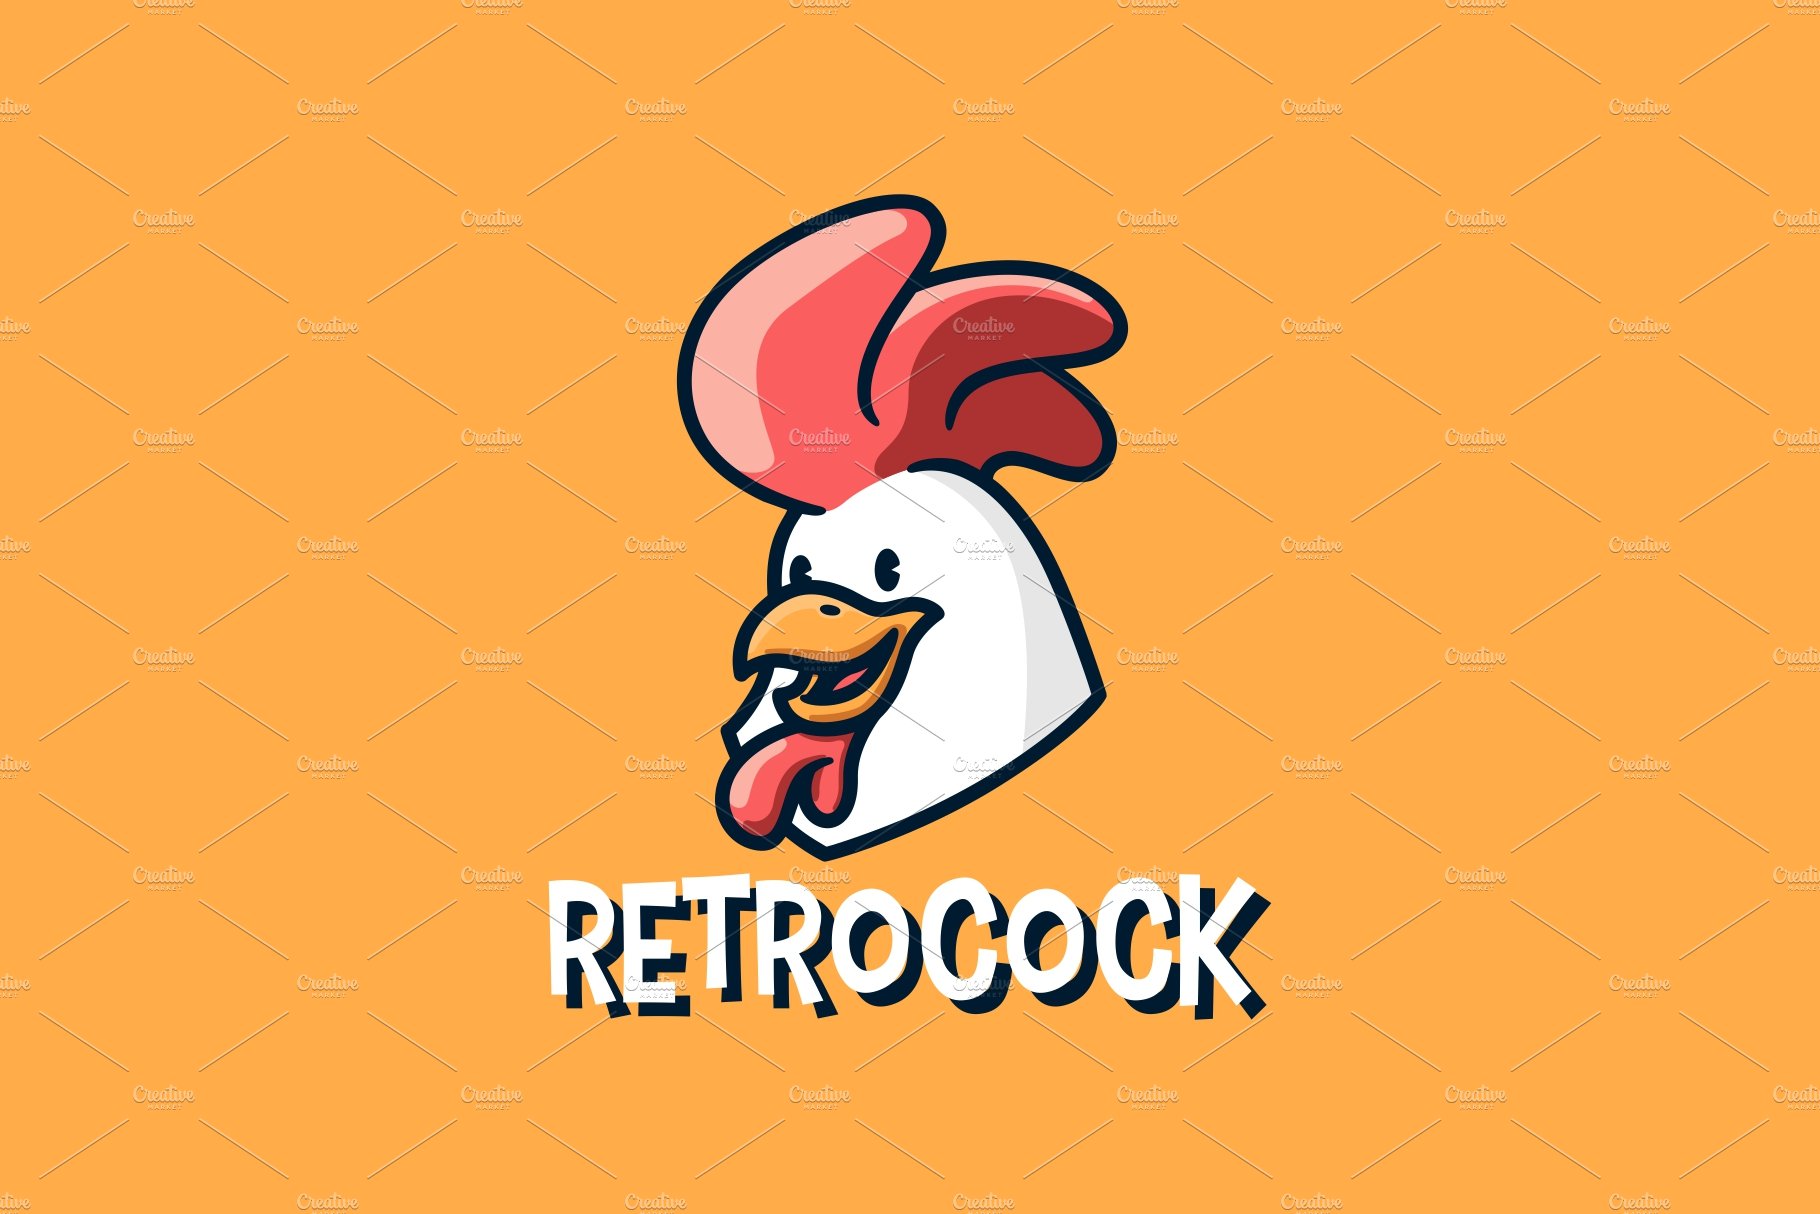 retro cock rooster chicken mascot cover image.